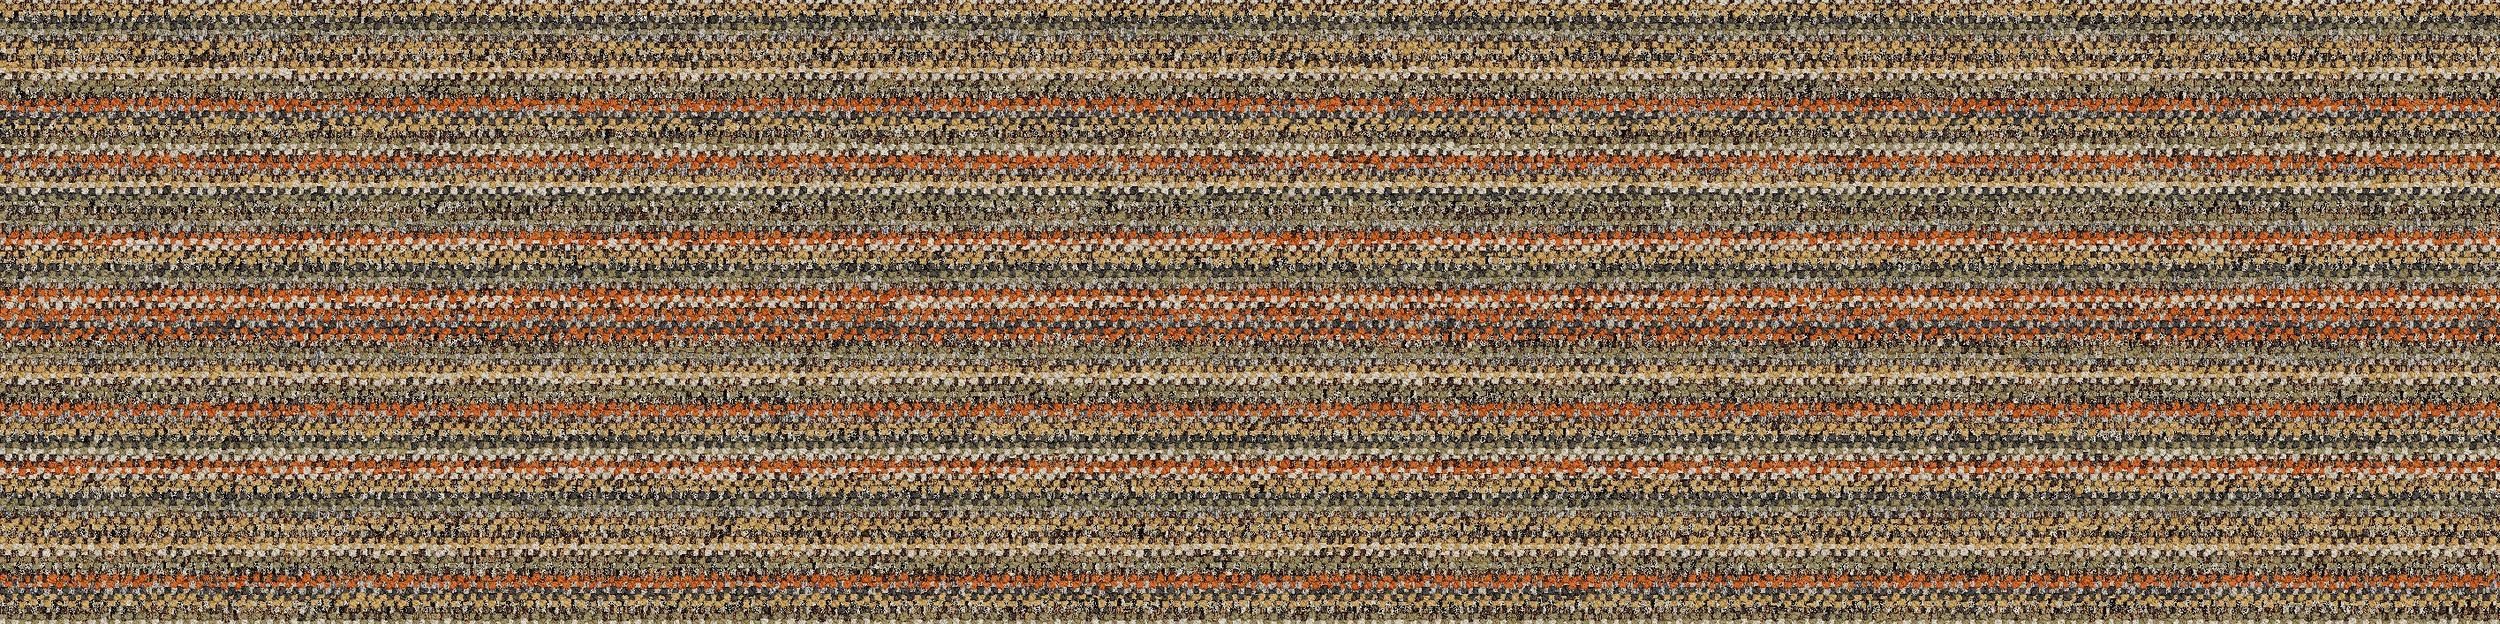 WW865 Carpet Tile In Autumn Warp imagen número 2